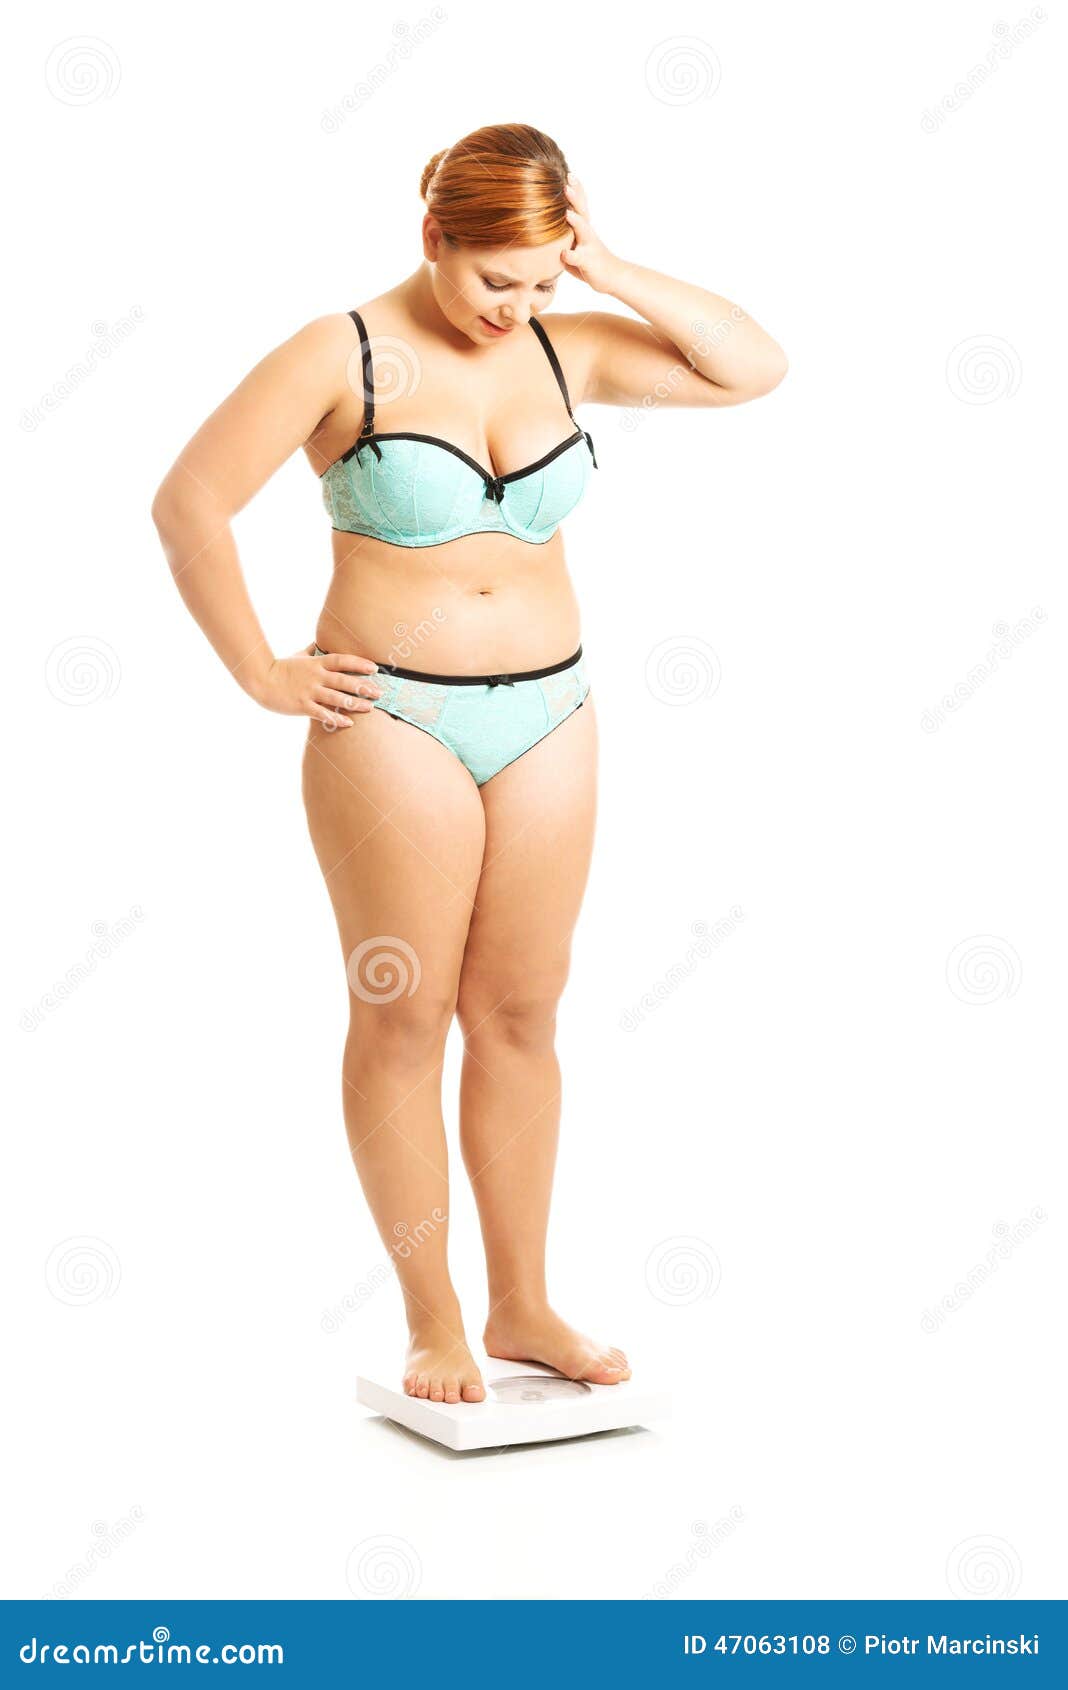 https://thumbs.dreamstime.com/z/fat-woman-standing-scale-47063108.jpg